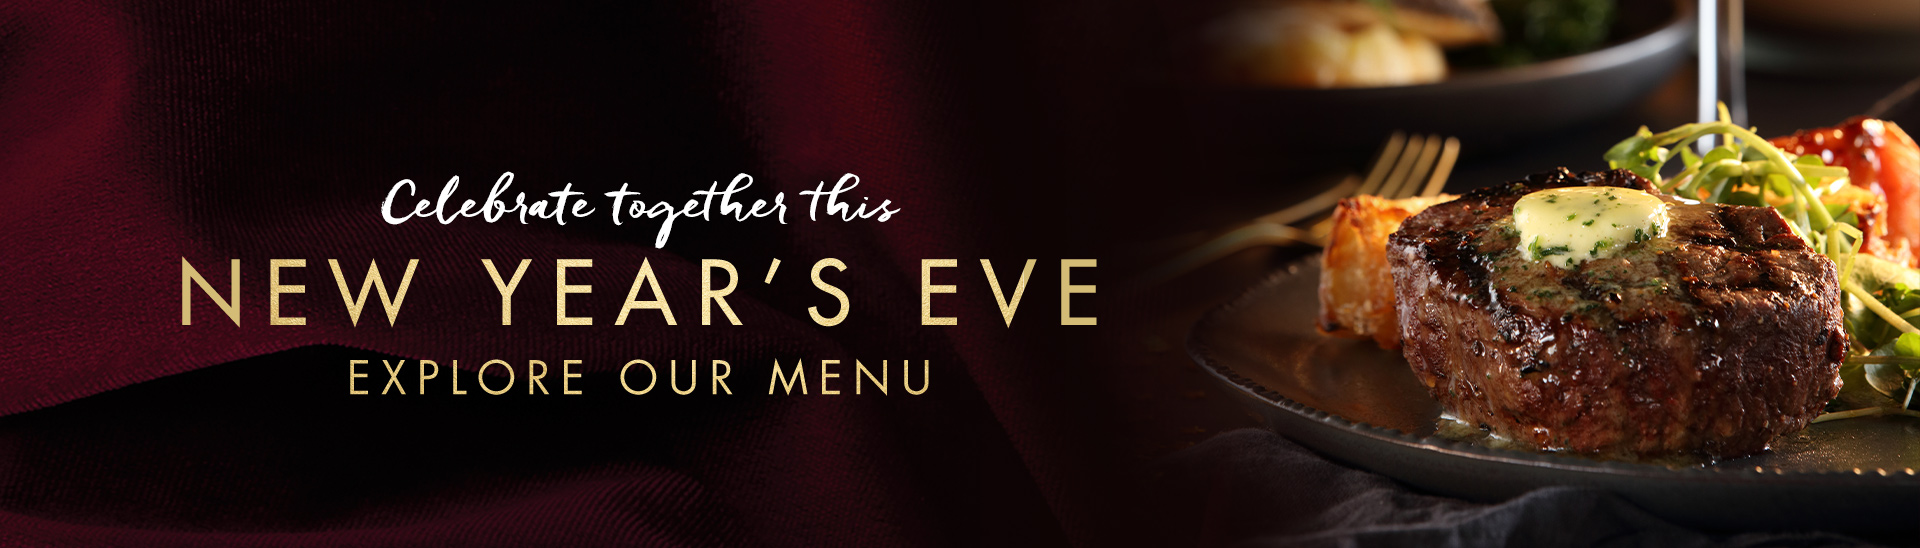 New Year’s eve menu at Miller & Carter Birmingham Hagley Road 